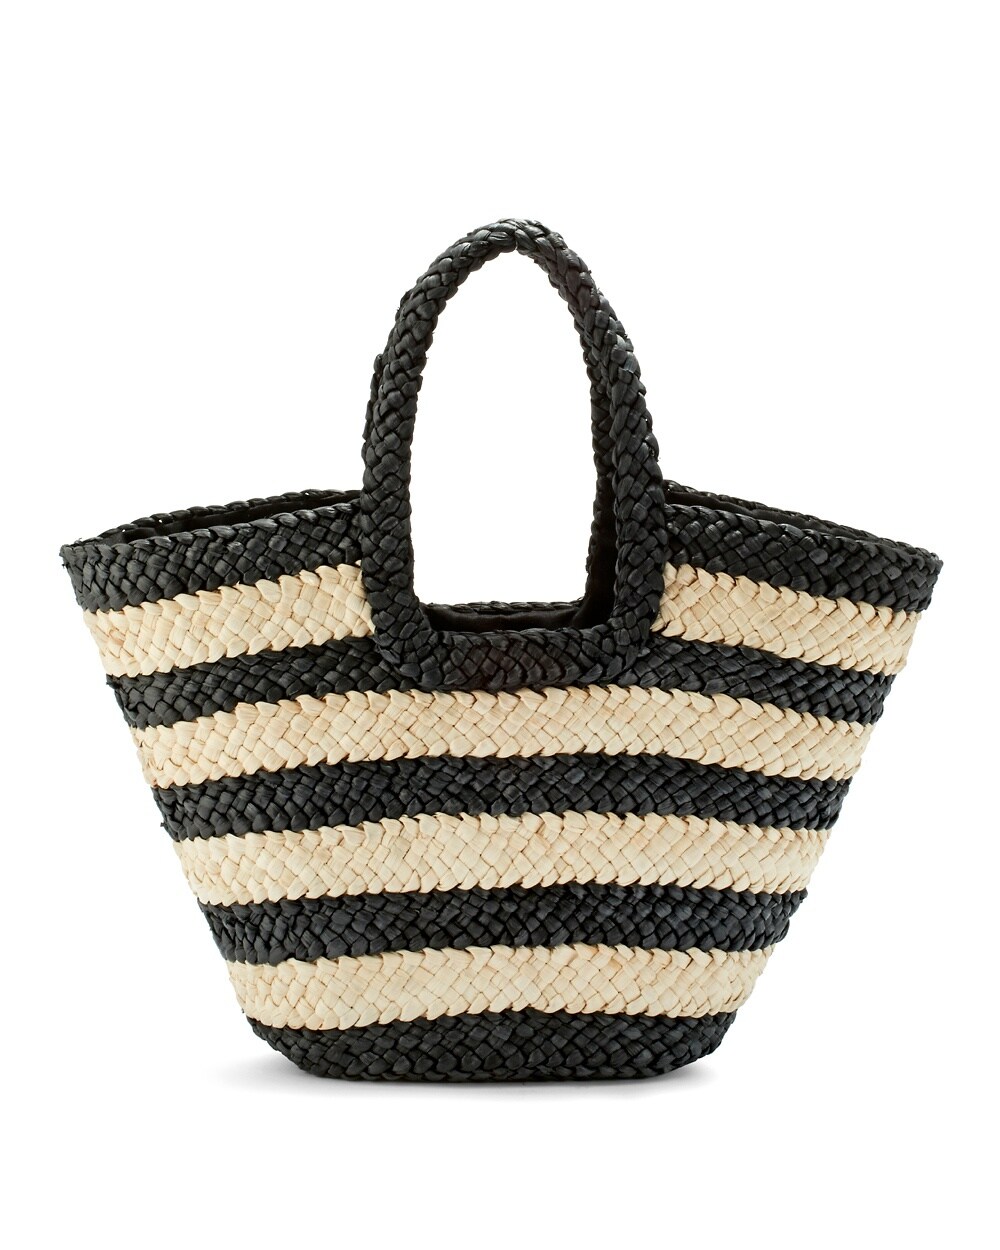 Black-and-White Striped Beach Bag